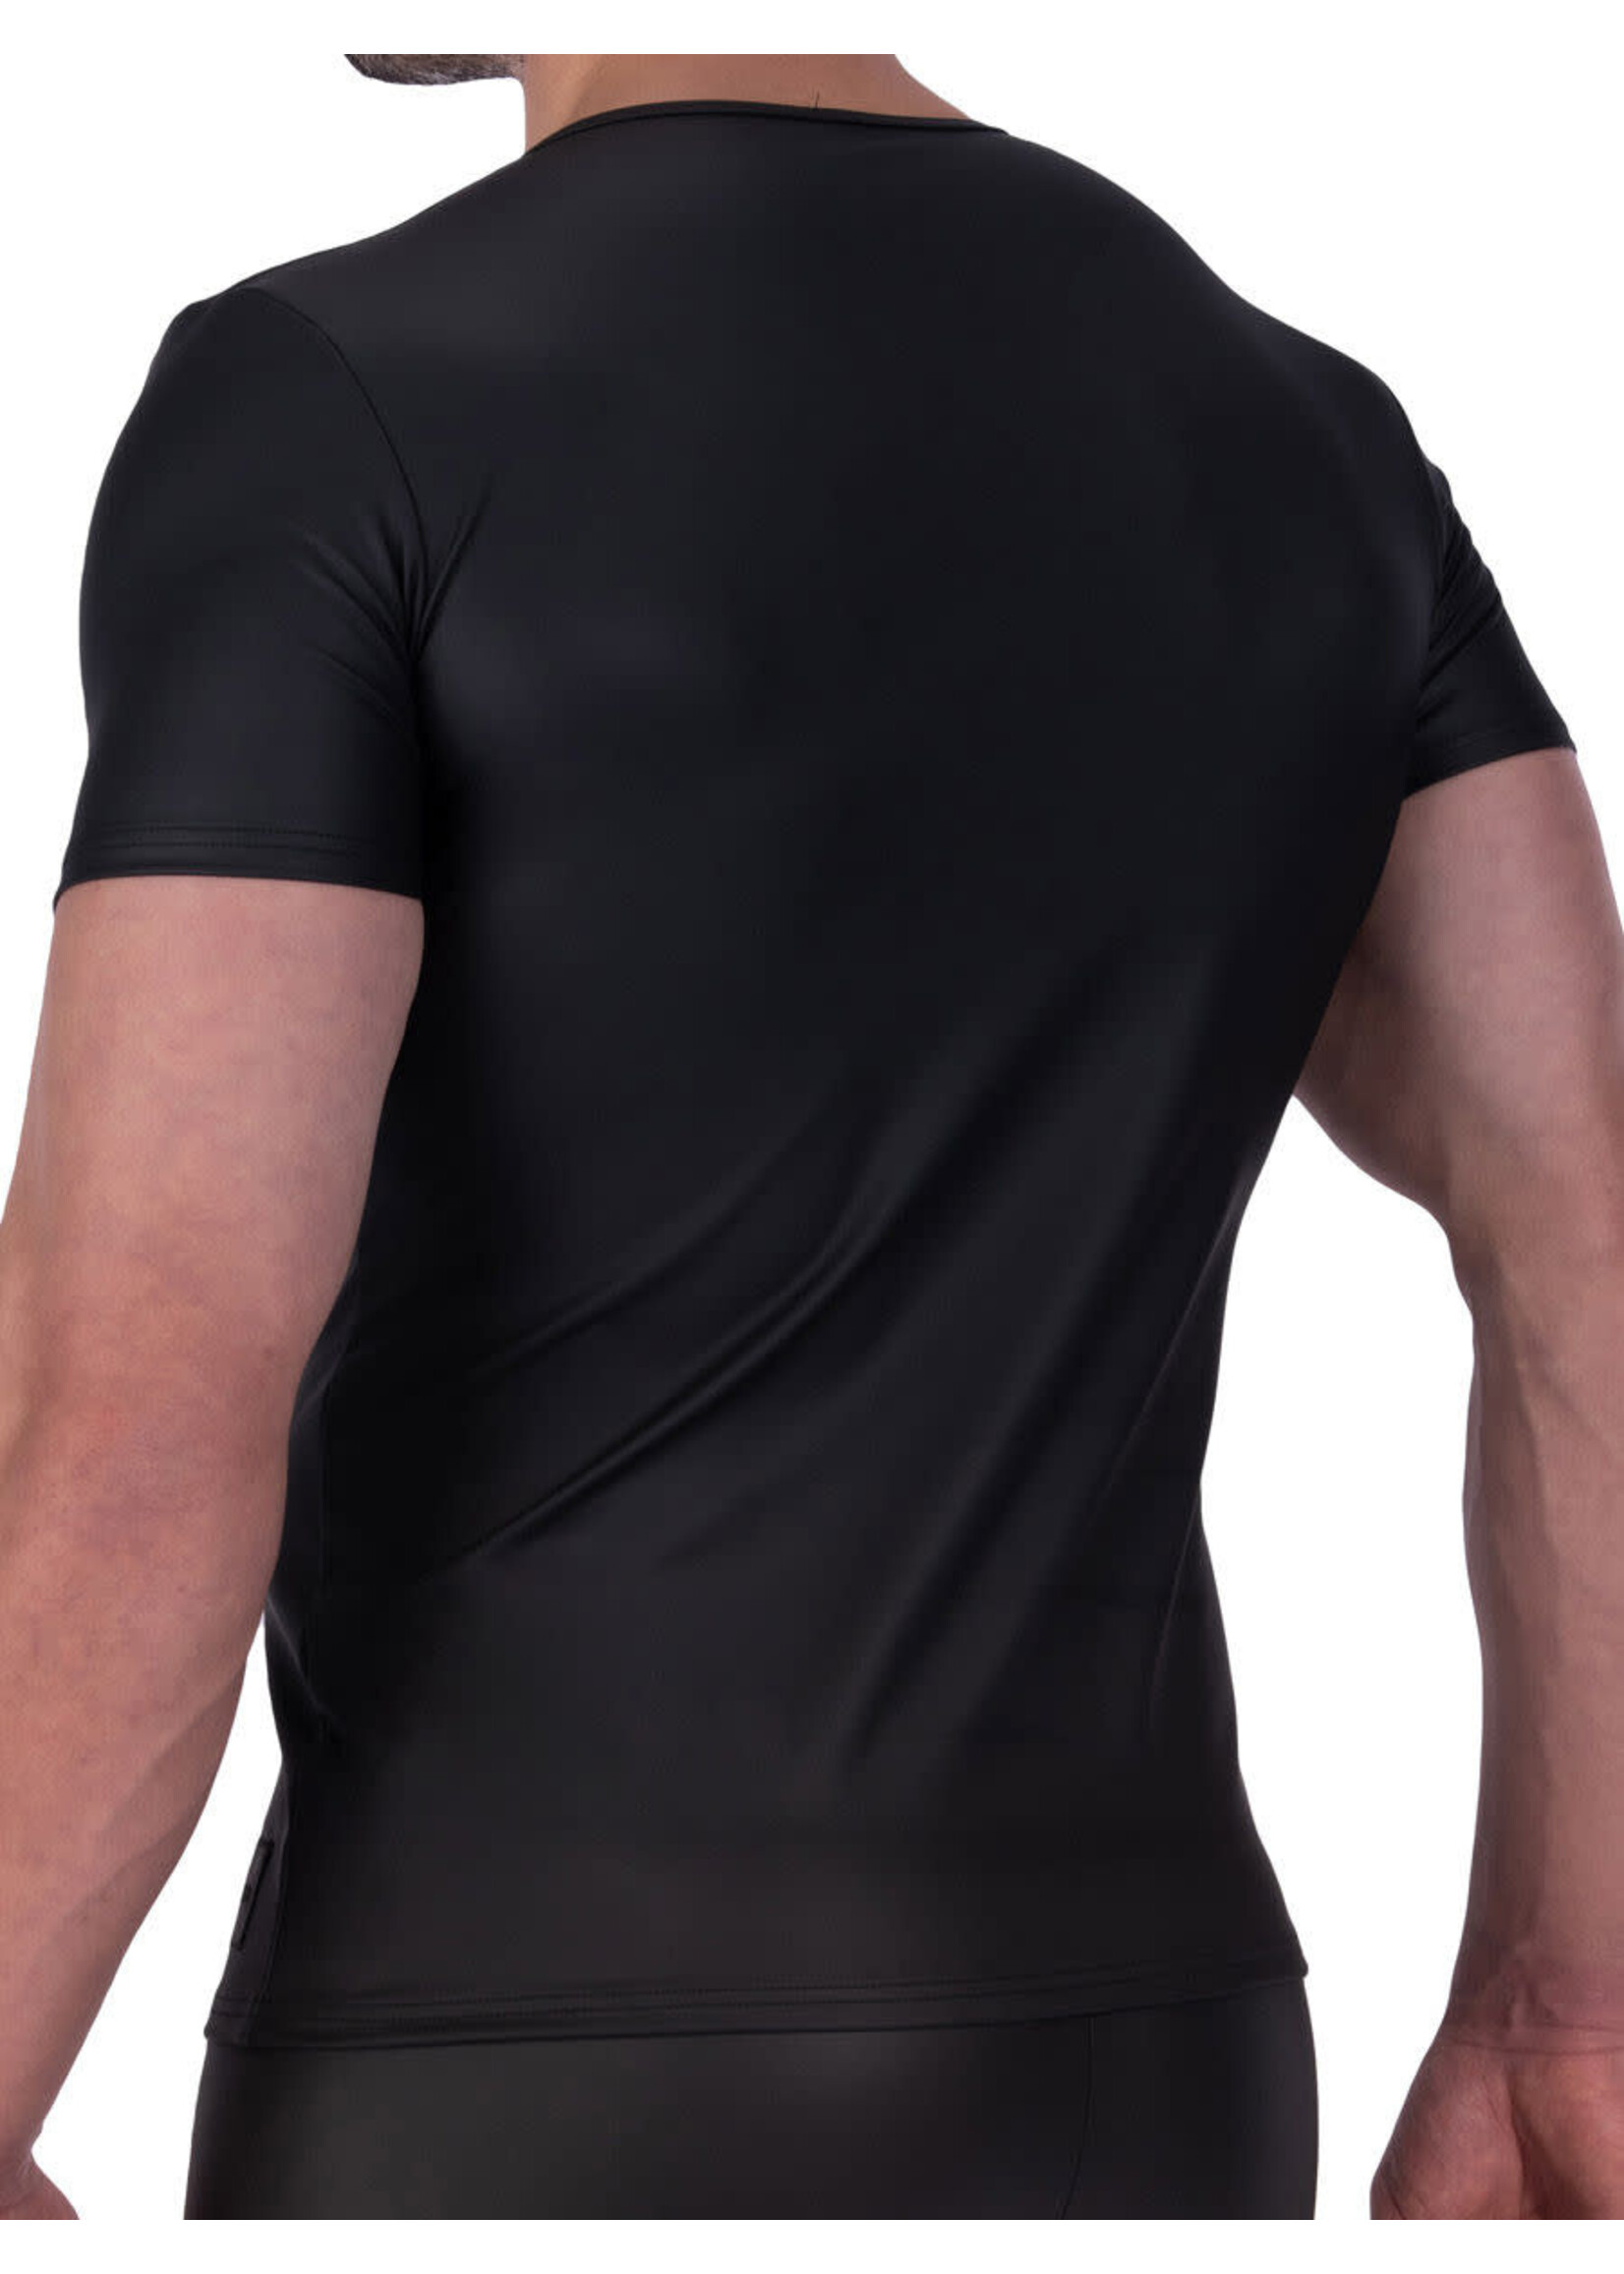 Manstore Zipped shirt - black